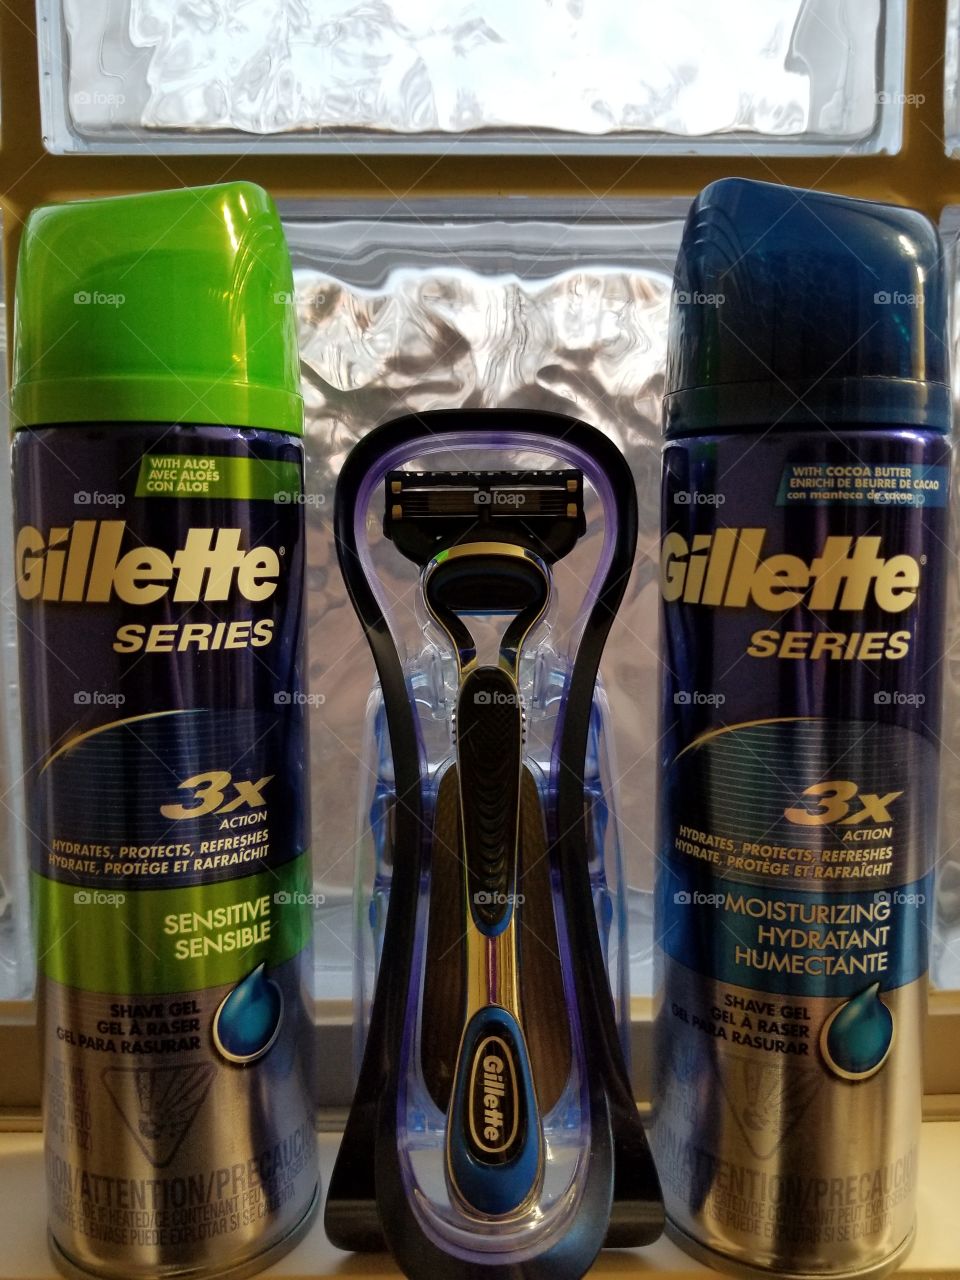 Gillette razor and shaving cream